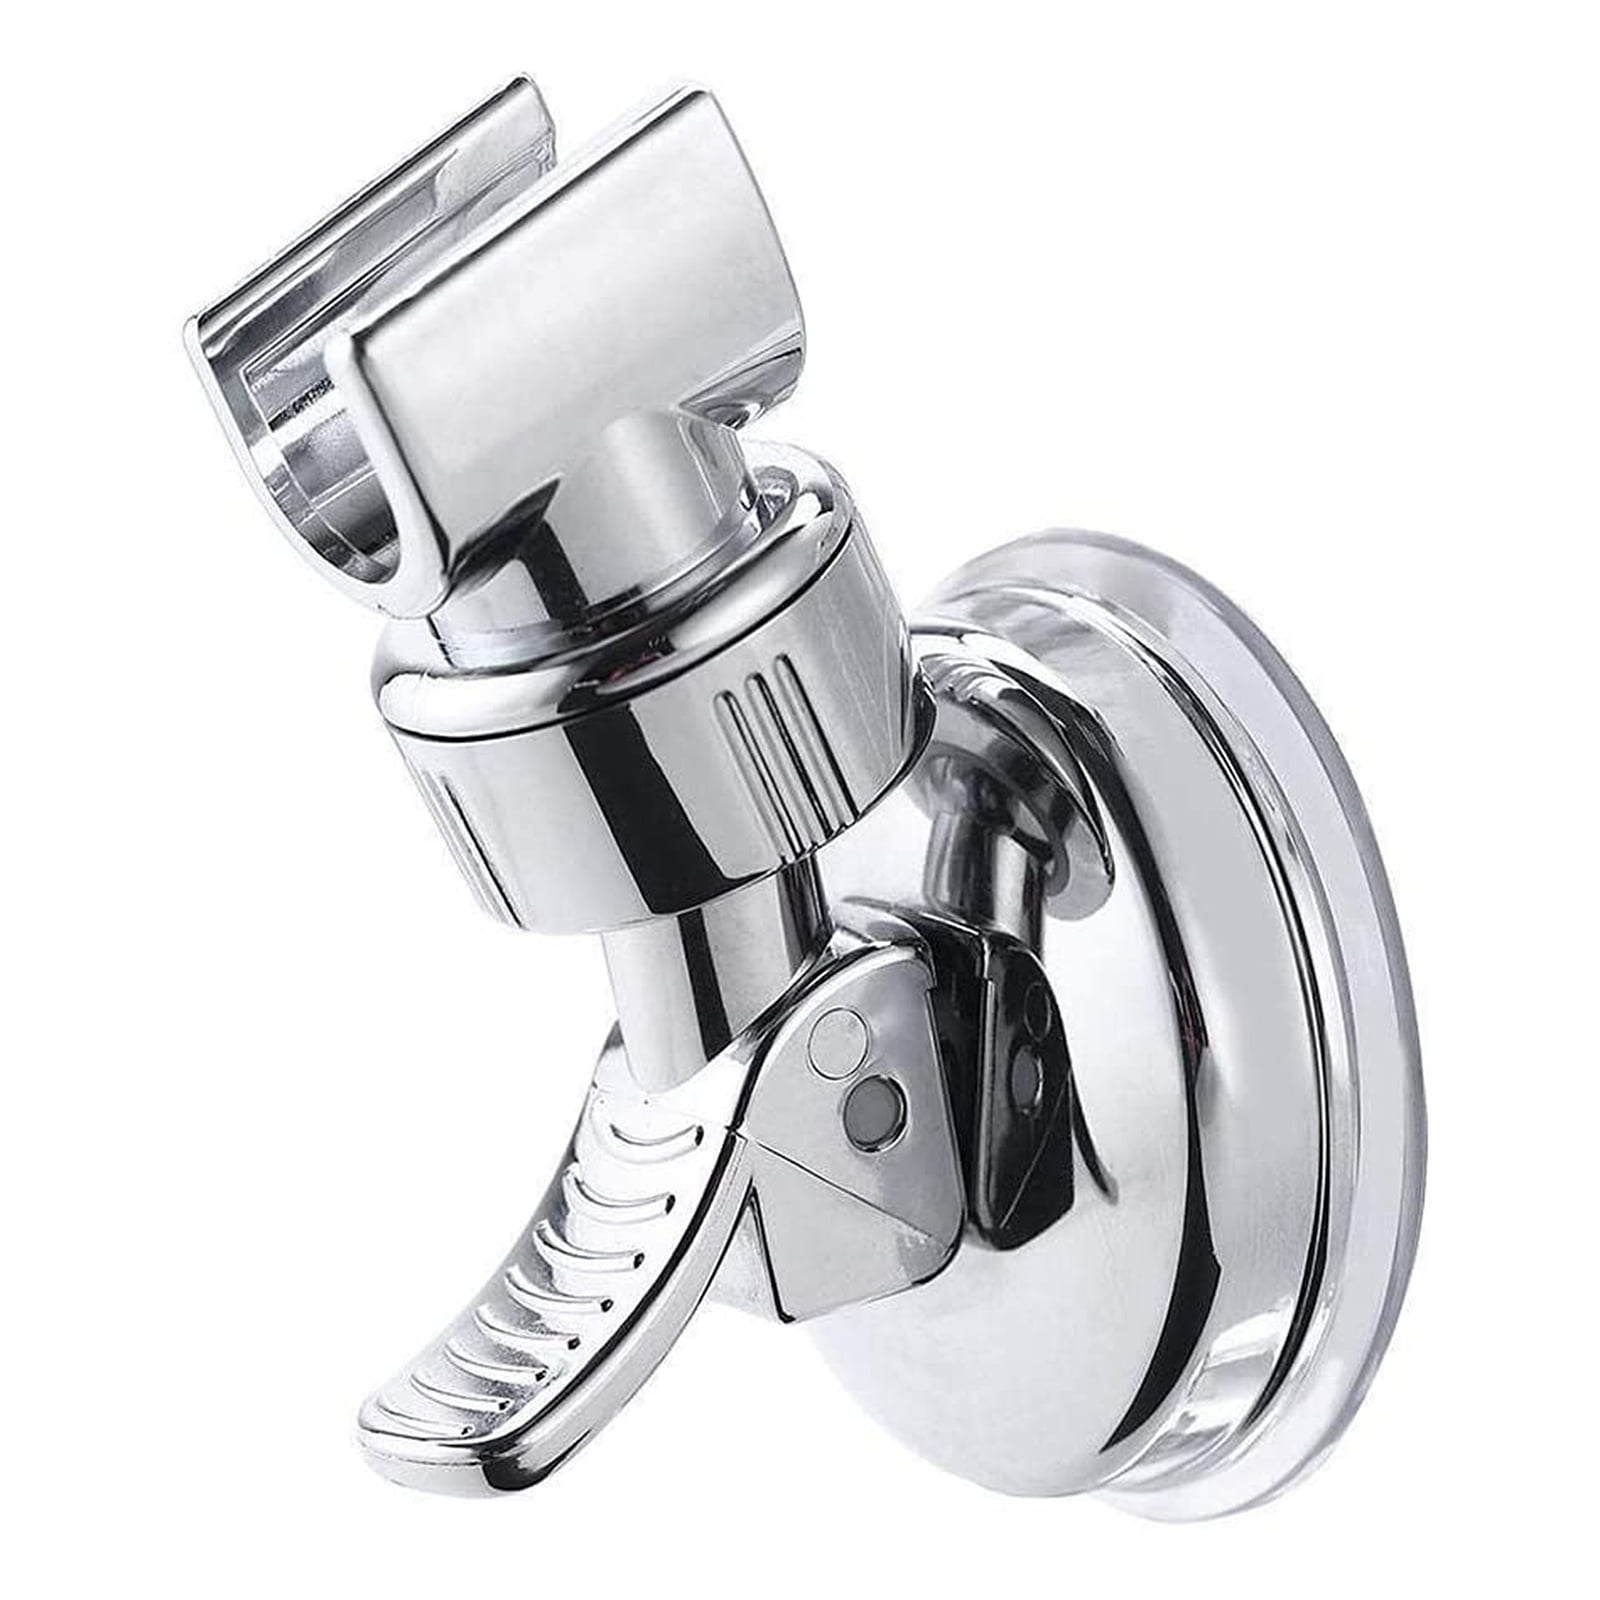 1 Pcs Shower Hea   d Holder Arm Mounted Adjustable Screwed Bracket Bathroom Tool 